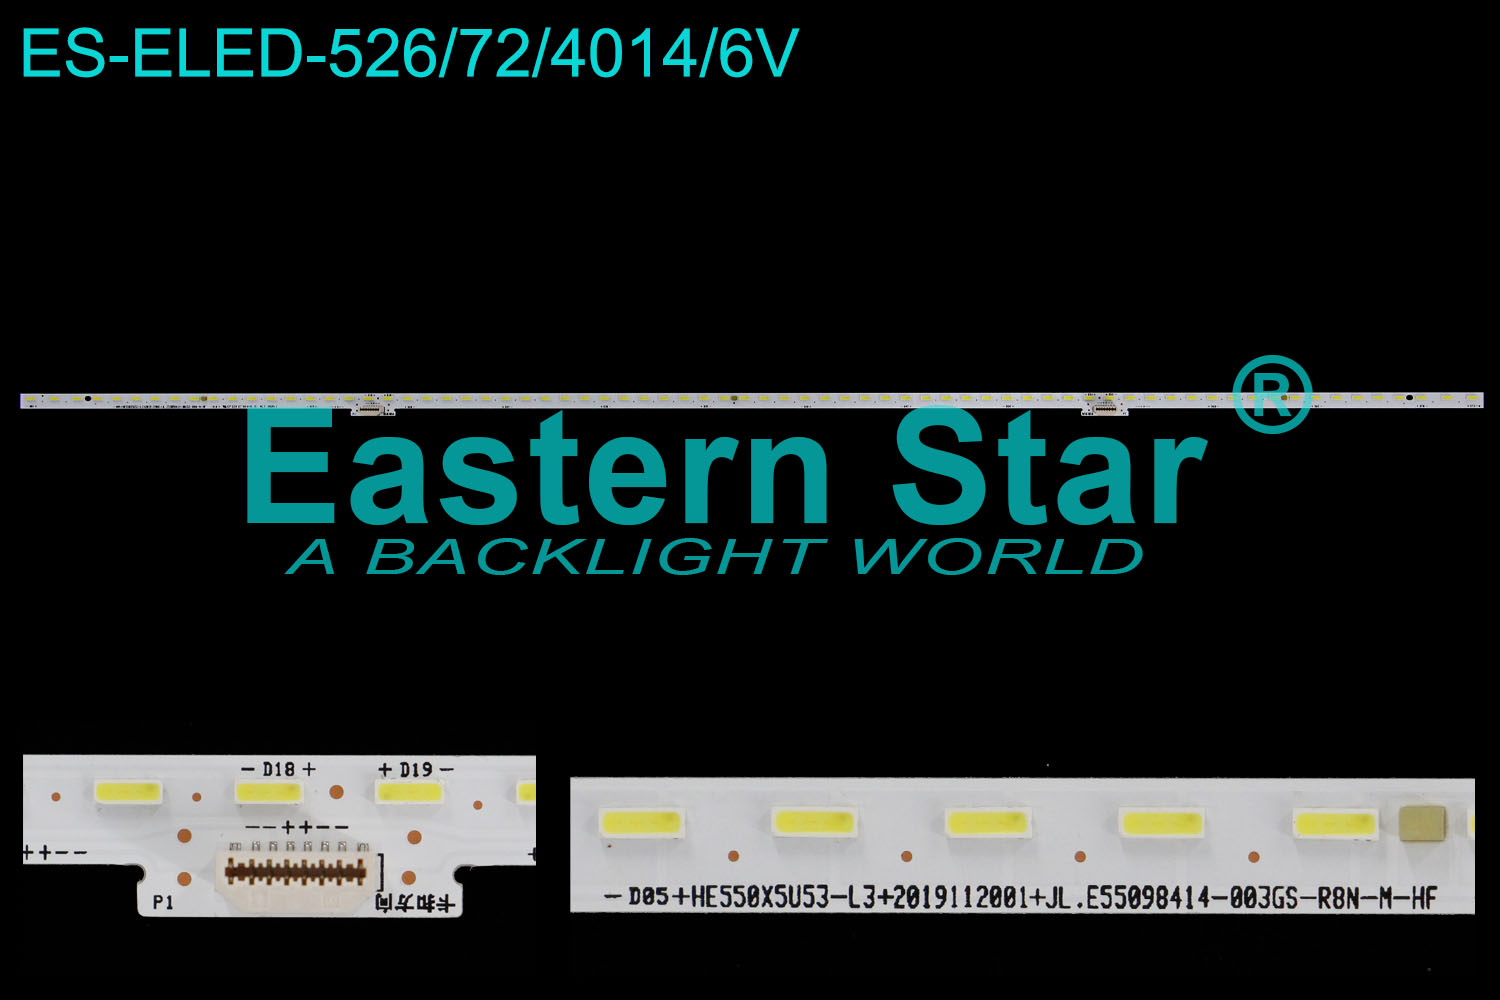 ES-ELED-526 ELED/EDGE TV backlight use for 55'' HE550X5U53-L3+2019112001_JL.E55098414-003GS-R8N-M-HF 22AKT MLT 2025 1233298 HE55N07K0174 GG-BM2 76D6BB60 GG-BM2 B1  LED STRIPS(/)